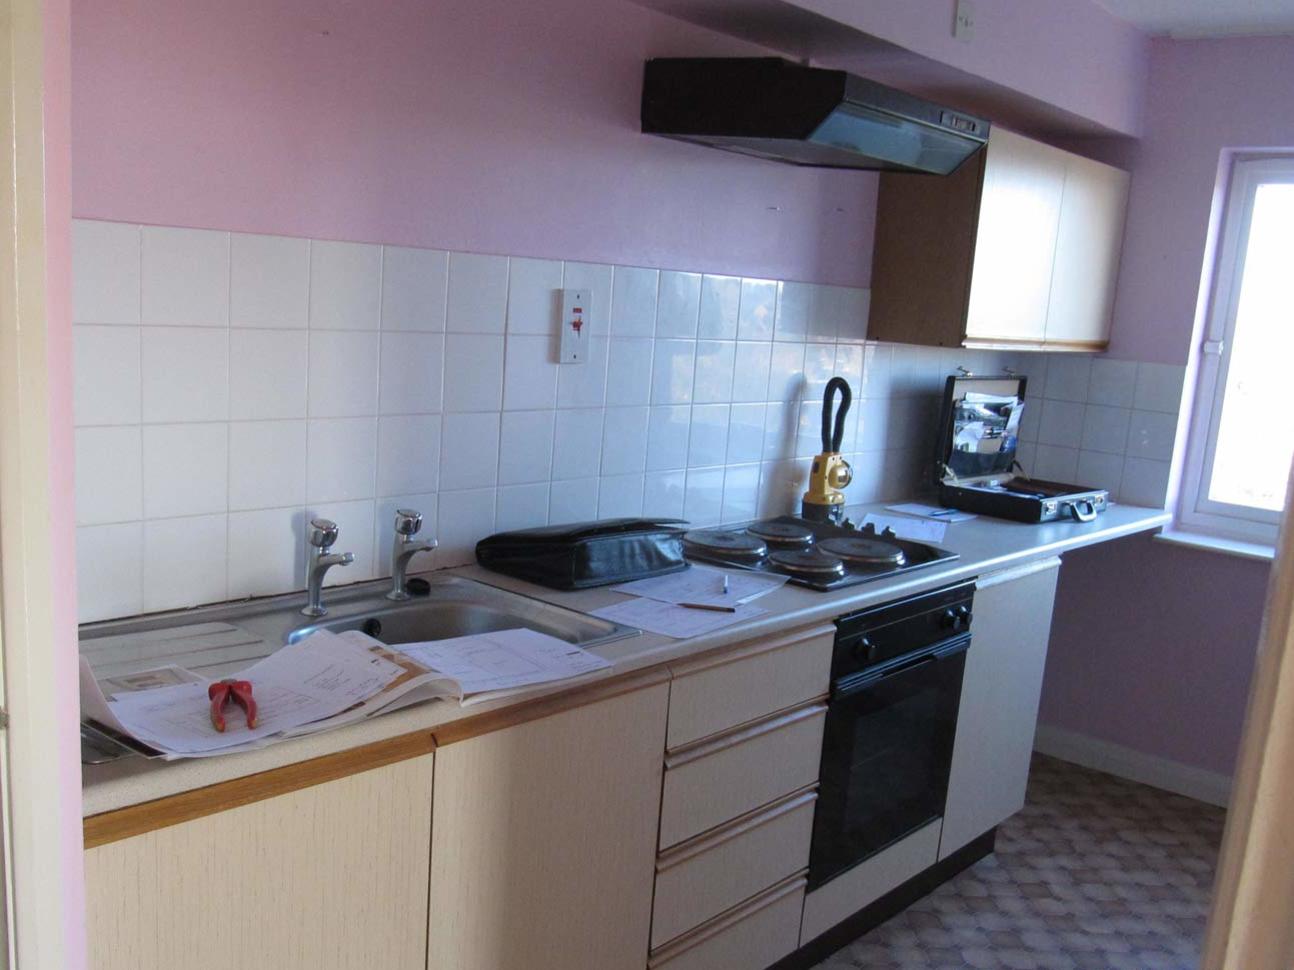 Rental Flat - Kitchen before refurbishment